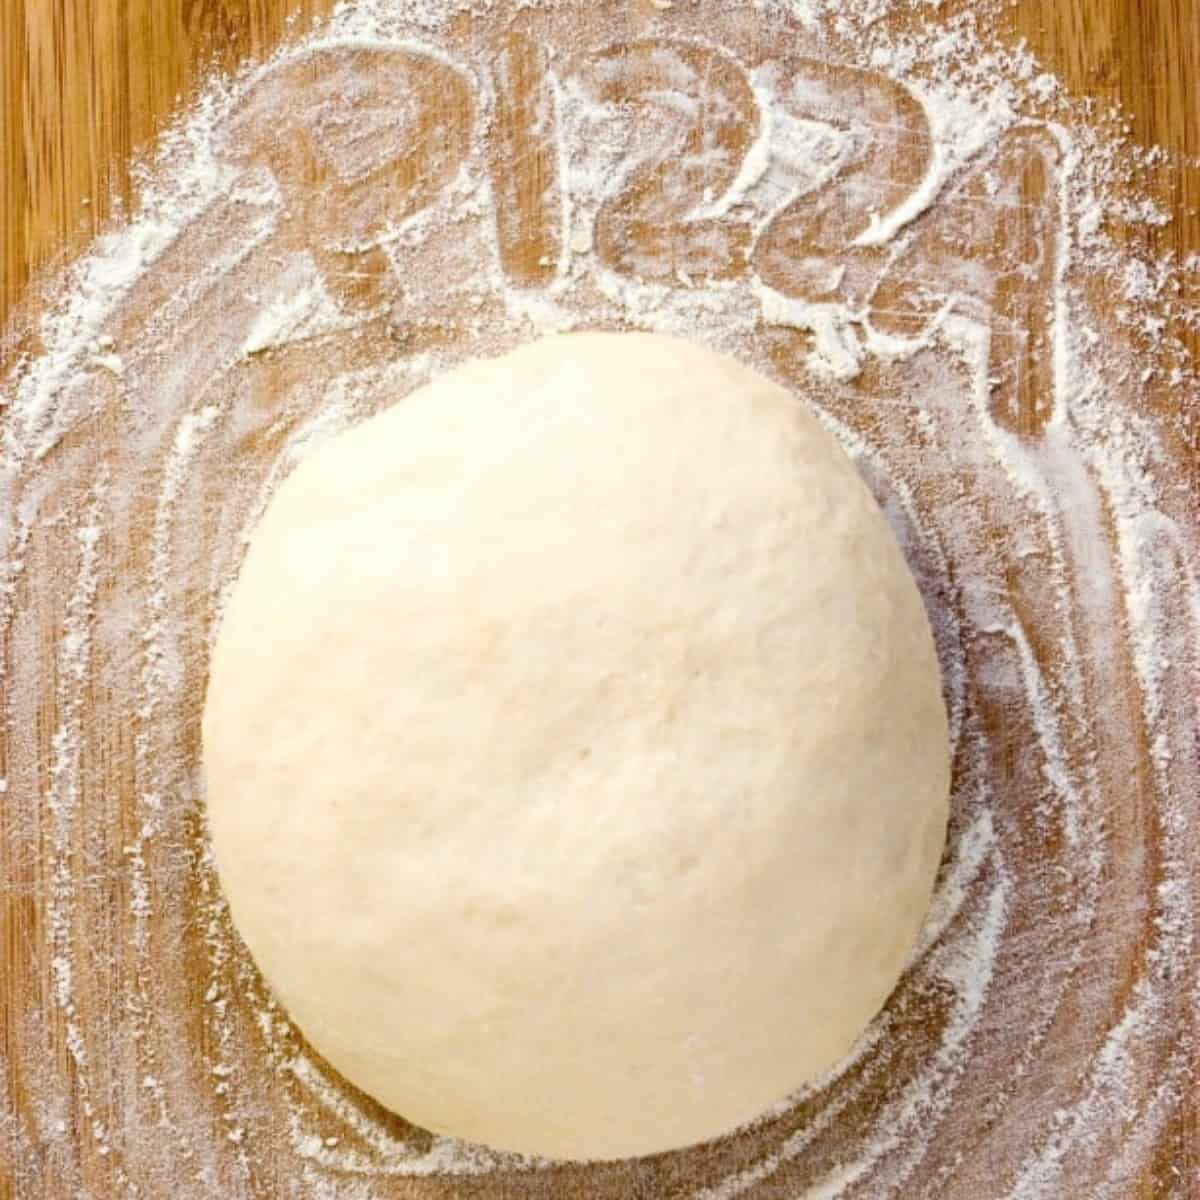 Ball of pizza dough on floured surface.